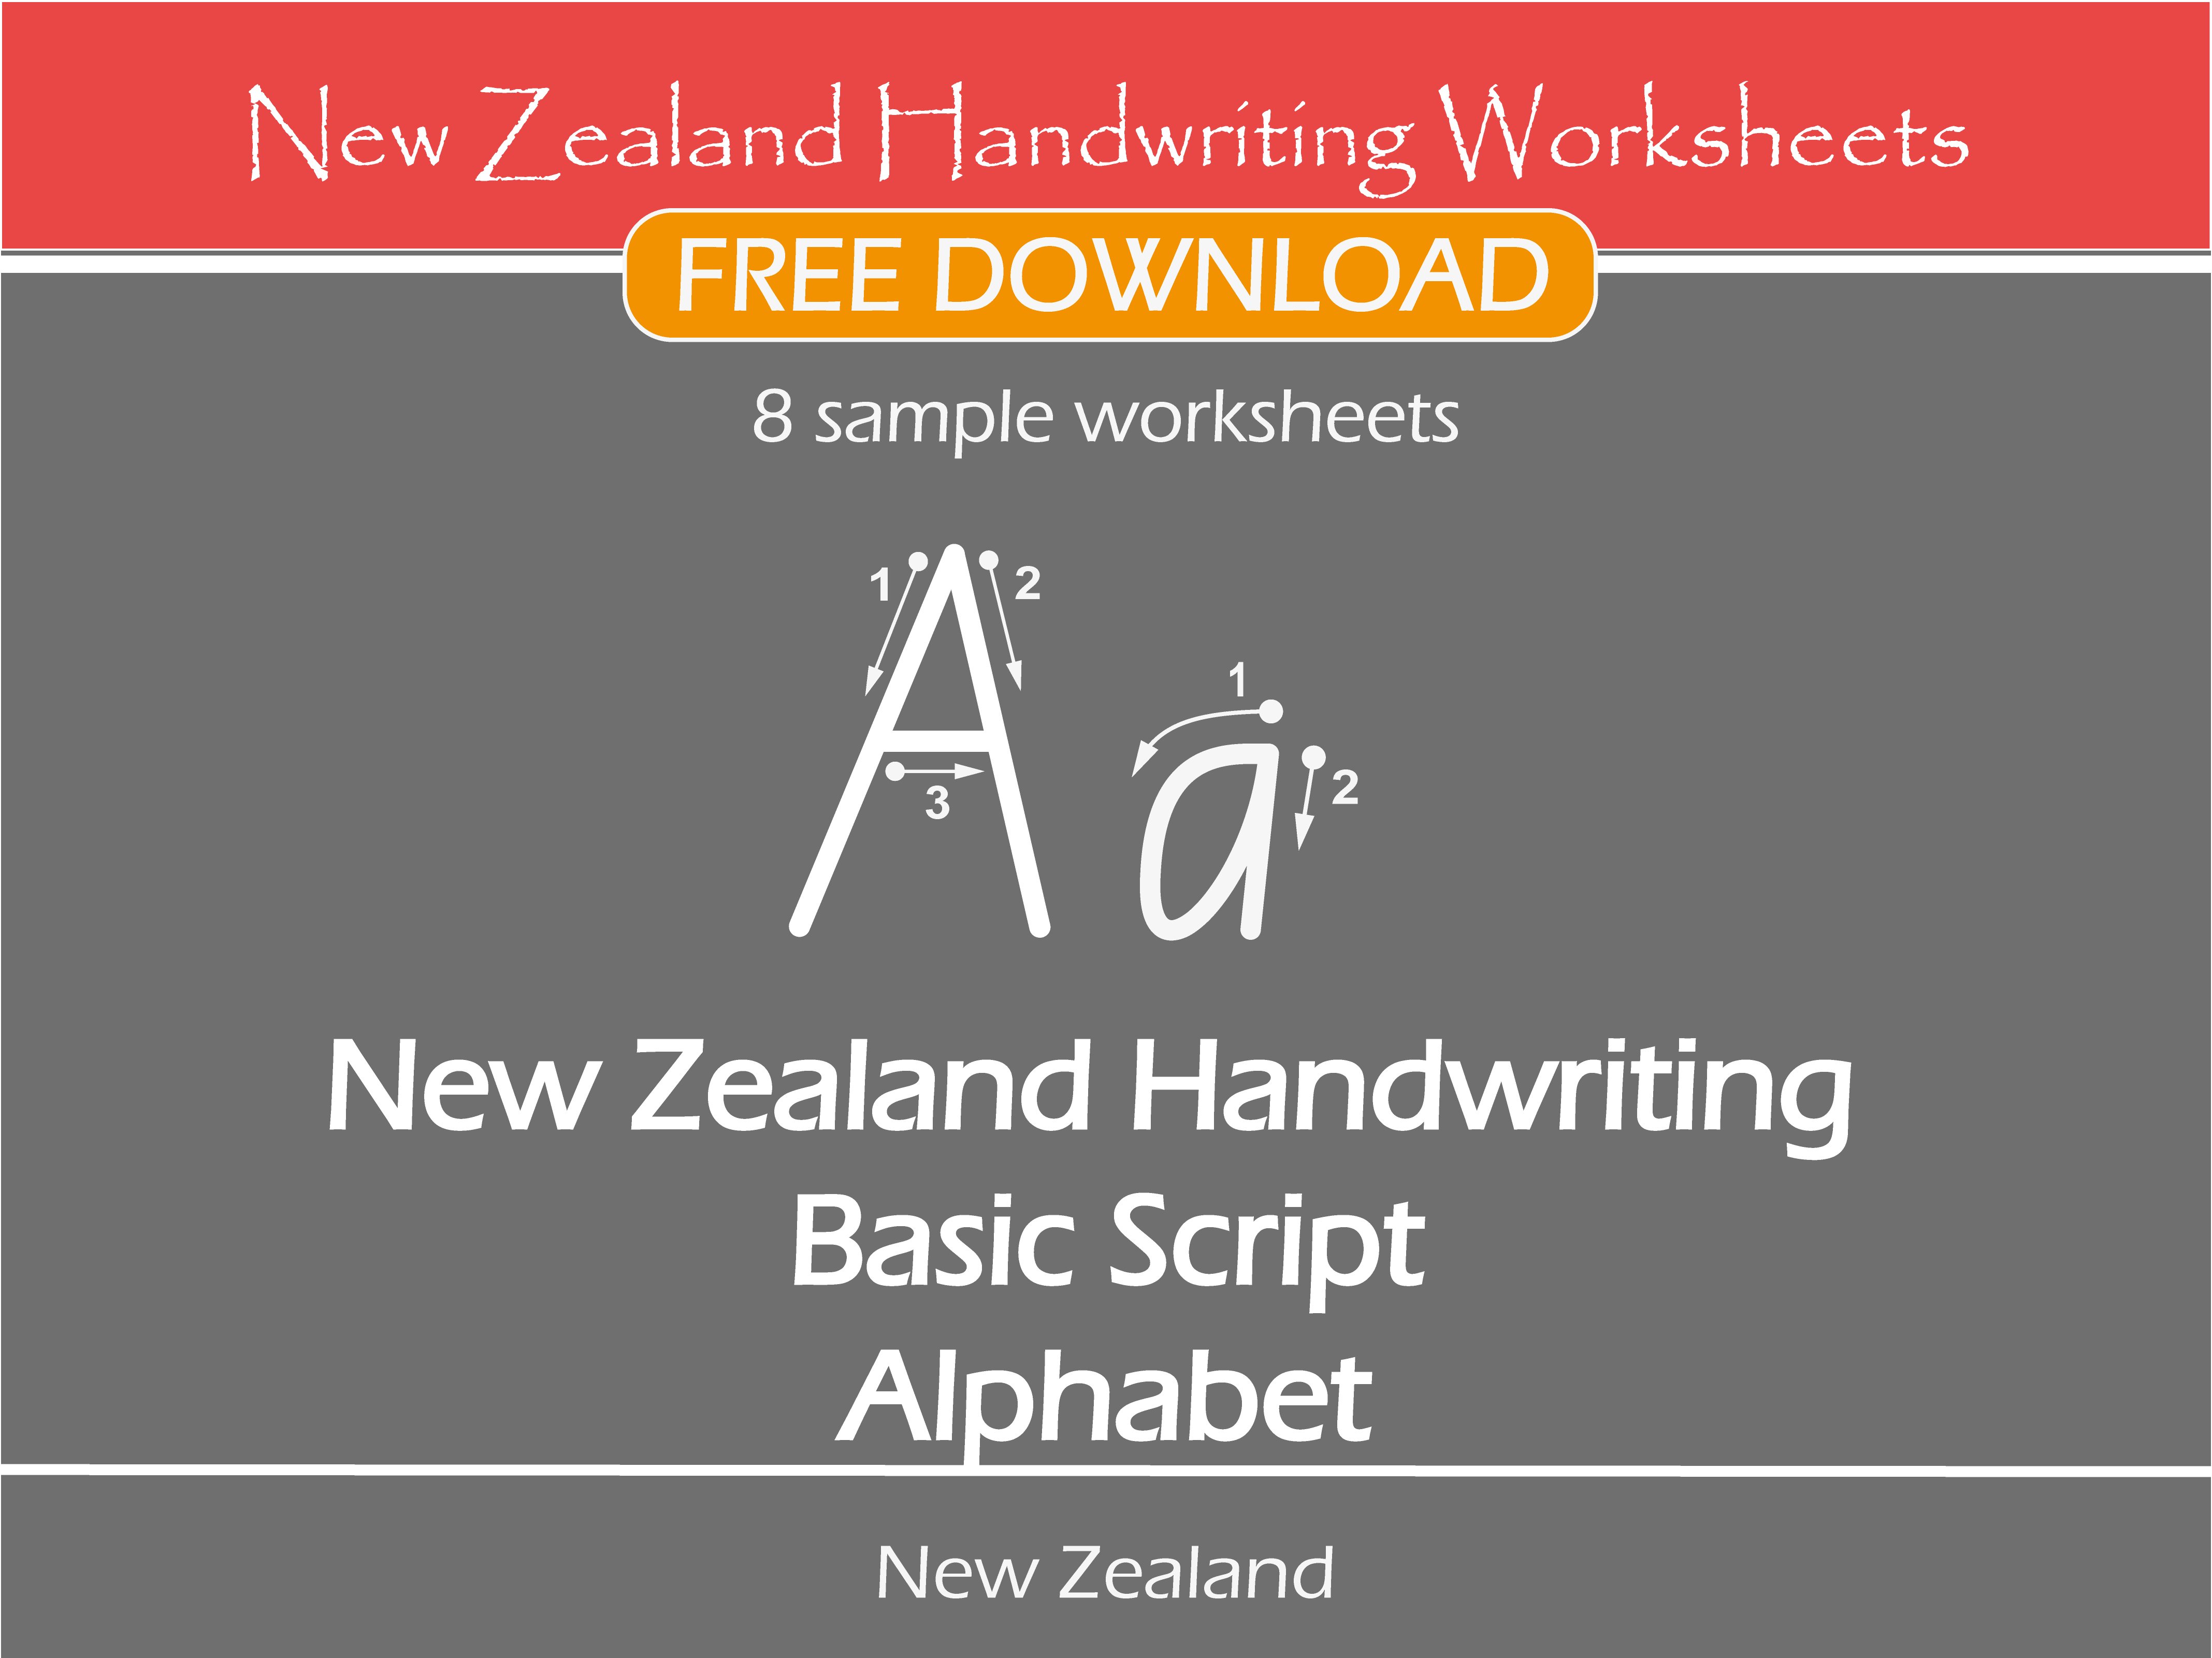 new-zealand-handwriting-worksheets-new-zealand-basic-script-free